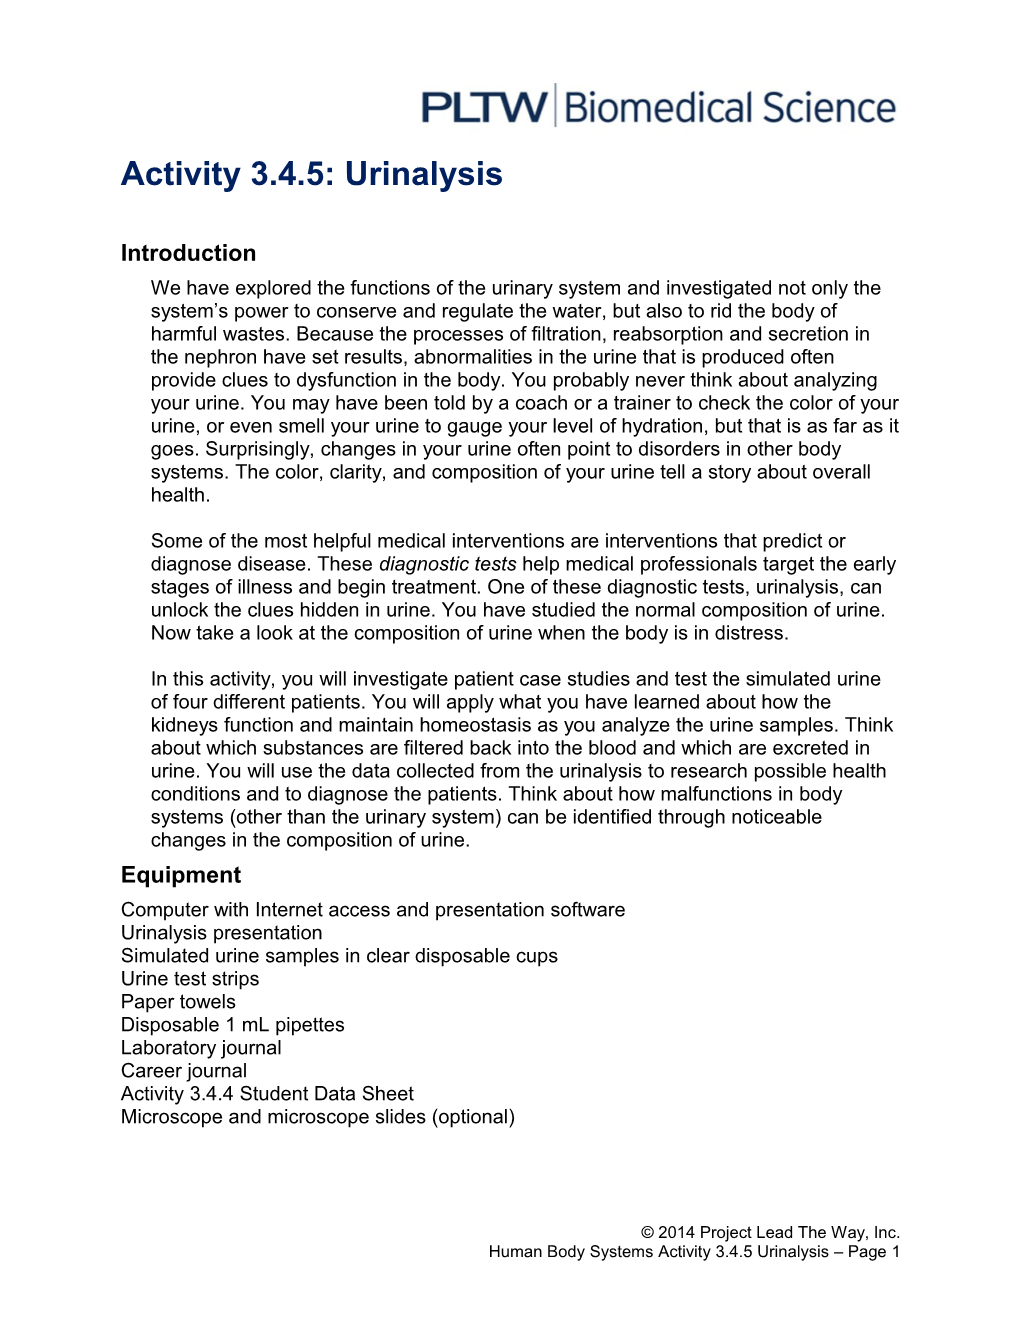 Activity 3.4.5: Urinalysis